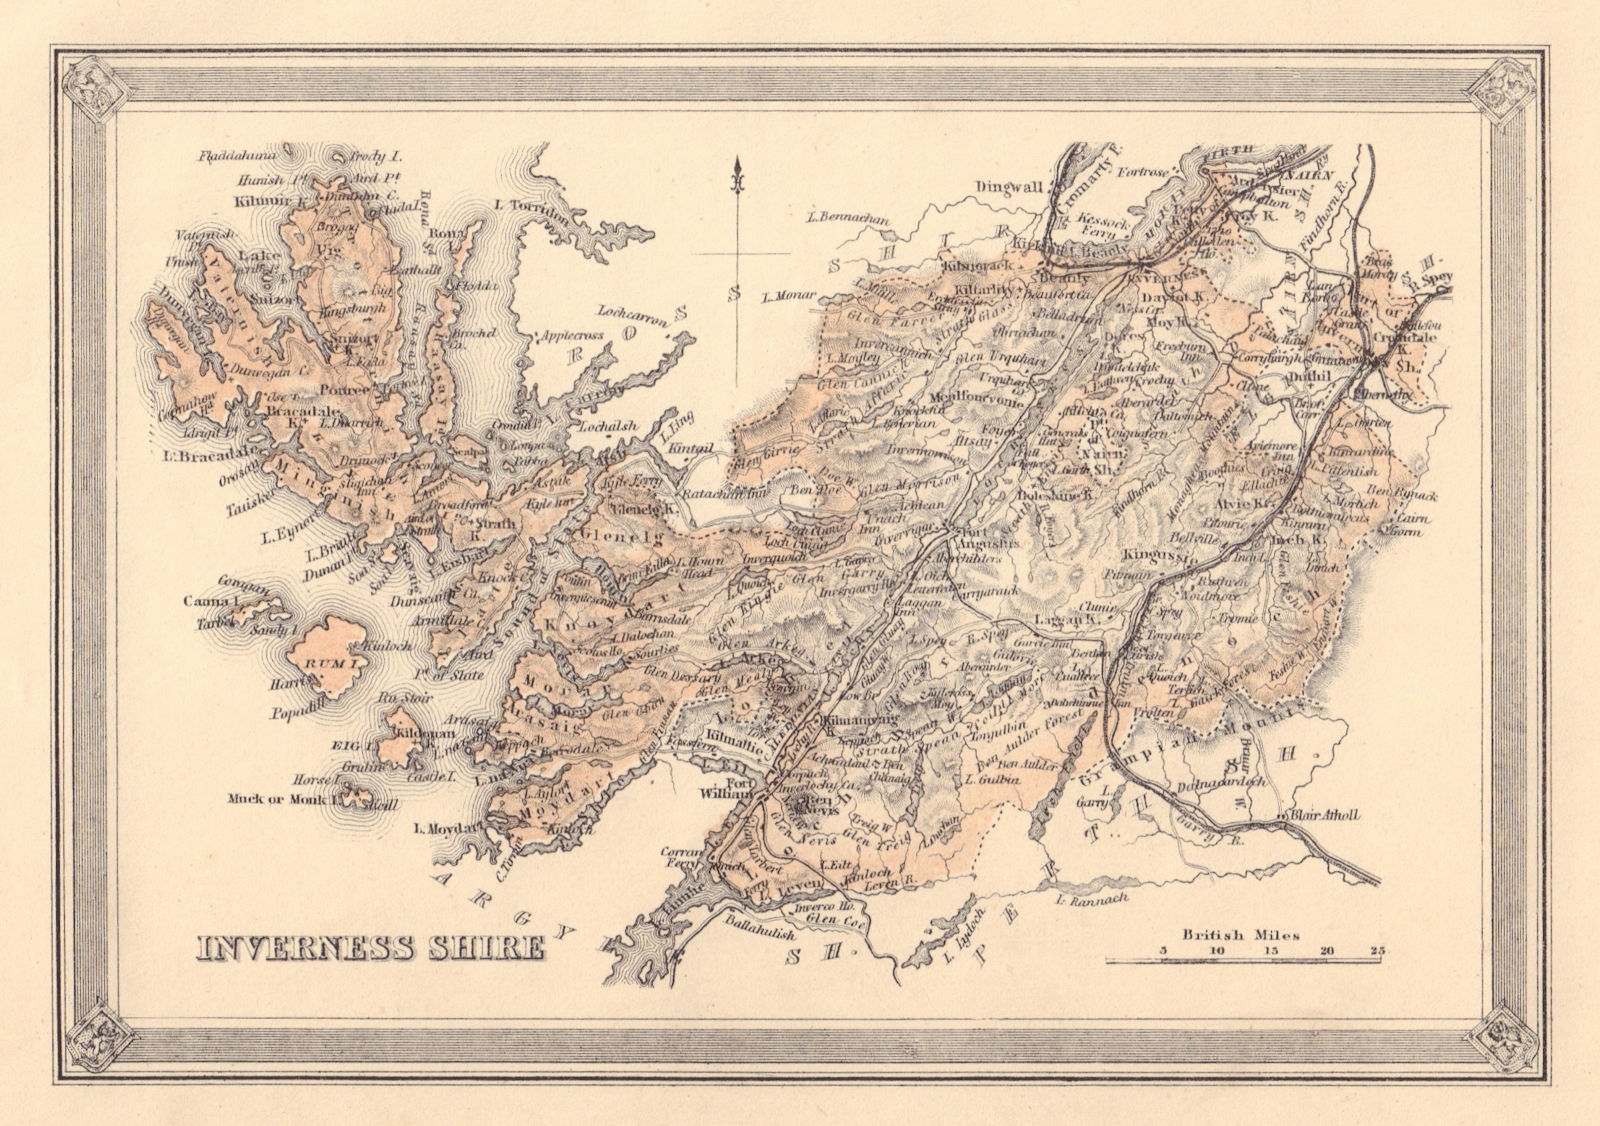 Associate Product Decorative antique county map of Inverness-shire, Scotland. FULLARTON 1866